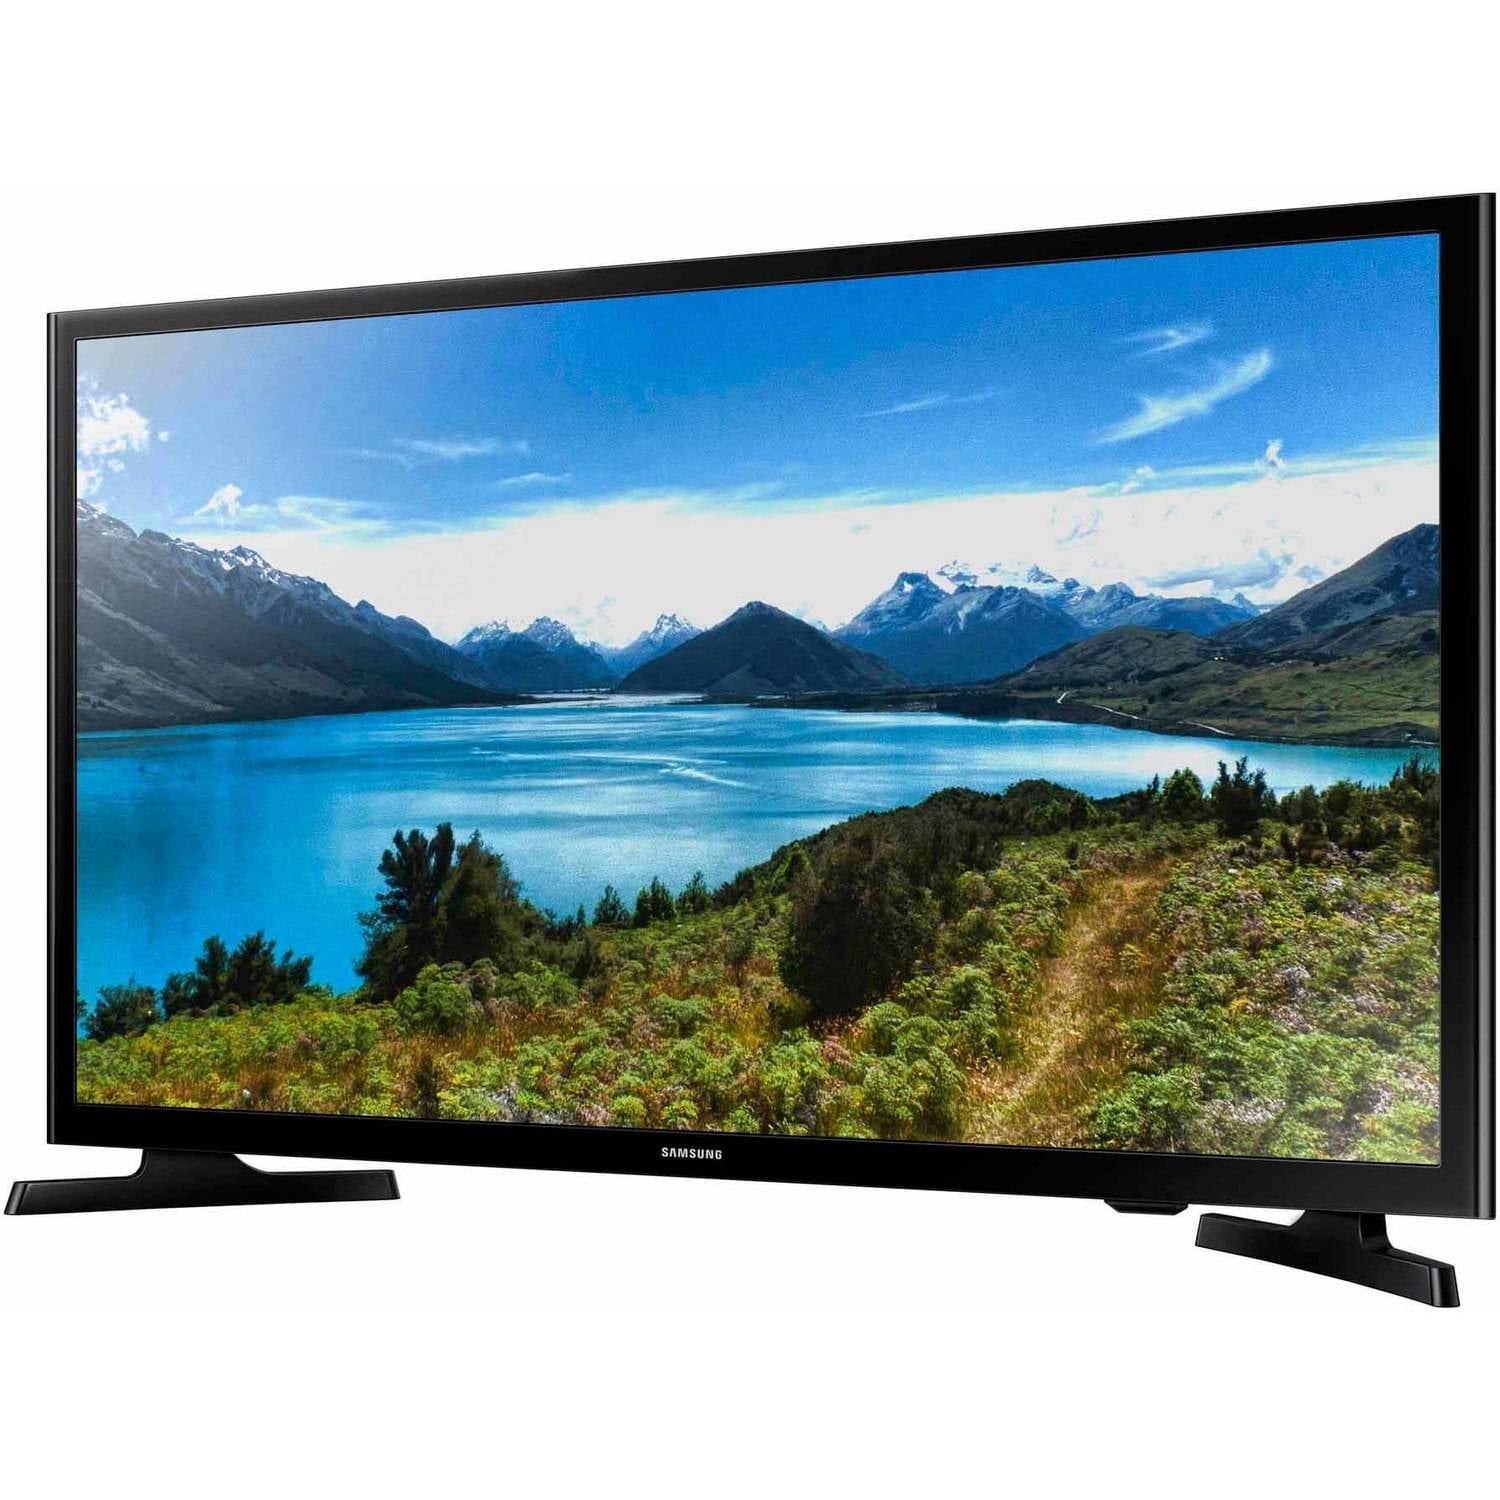 Penélope Vuelo tablero SAMSUNG 32" Class HD (720P) LED TV (UN32J4000BFXZA) (Discontinued) -  Walmart.com